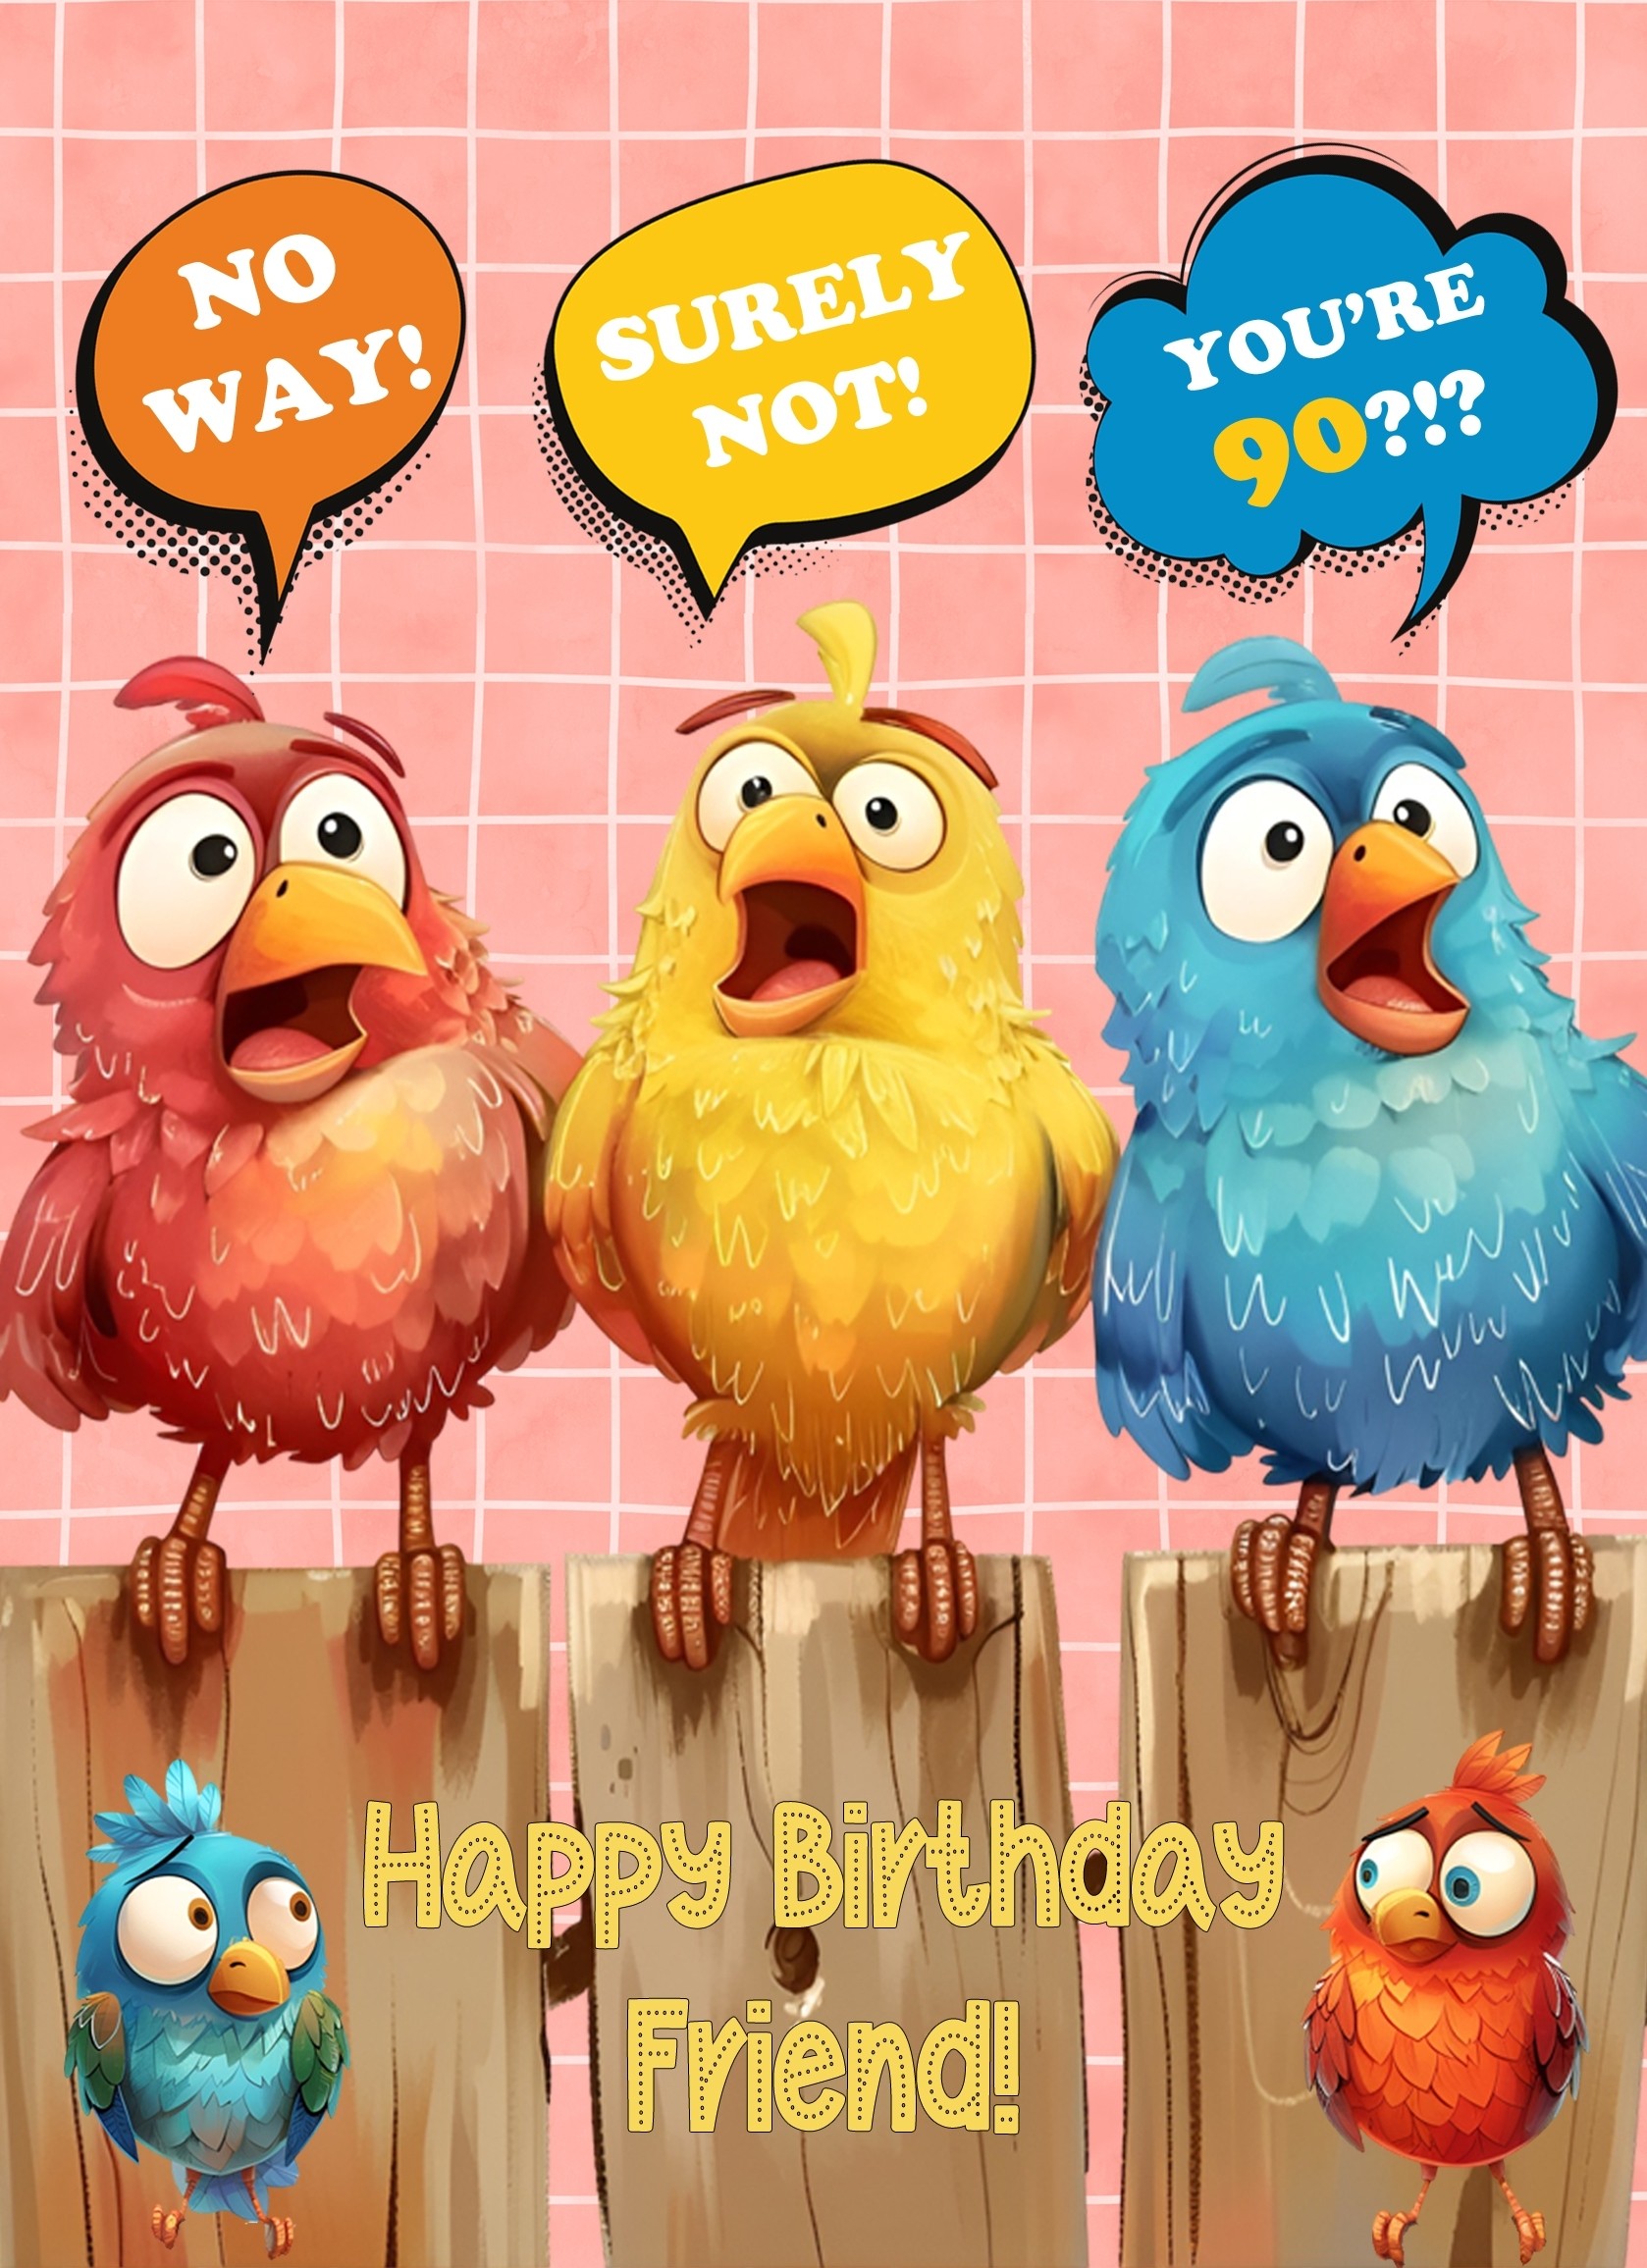 Friend 90th Birthday Card (Funny Birds Surprised)